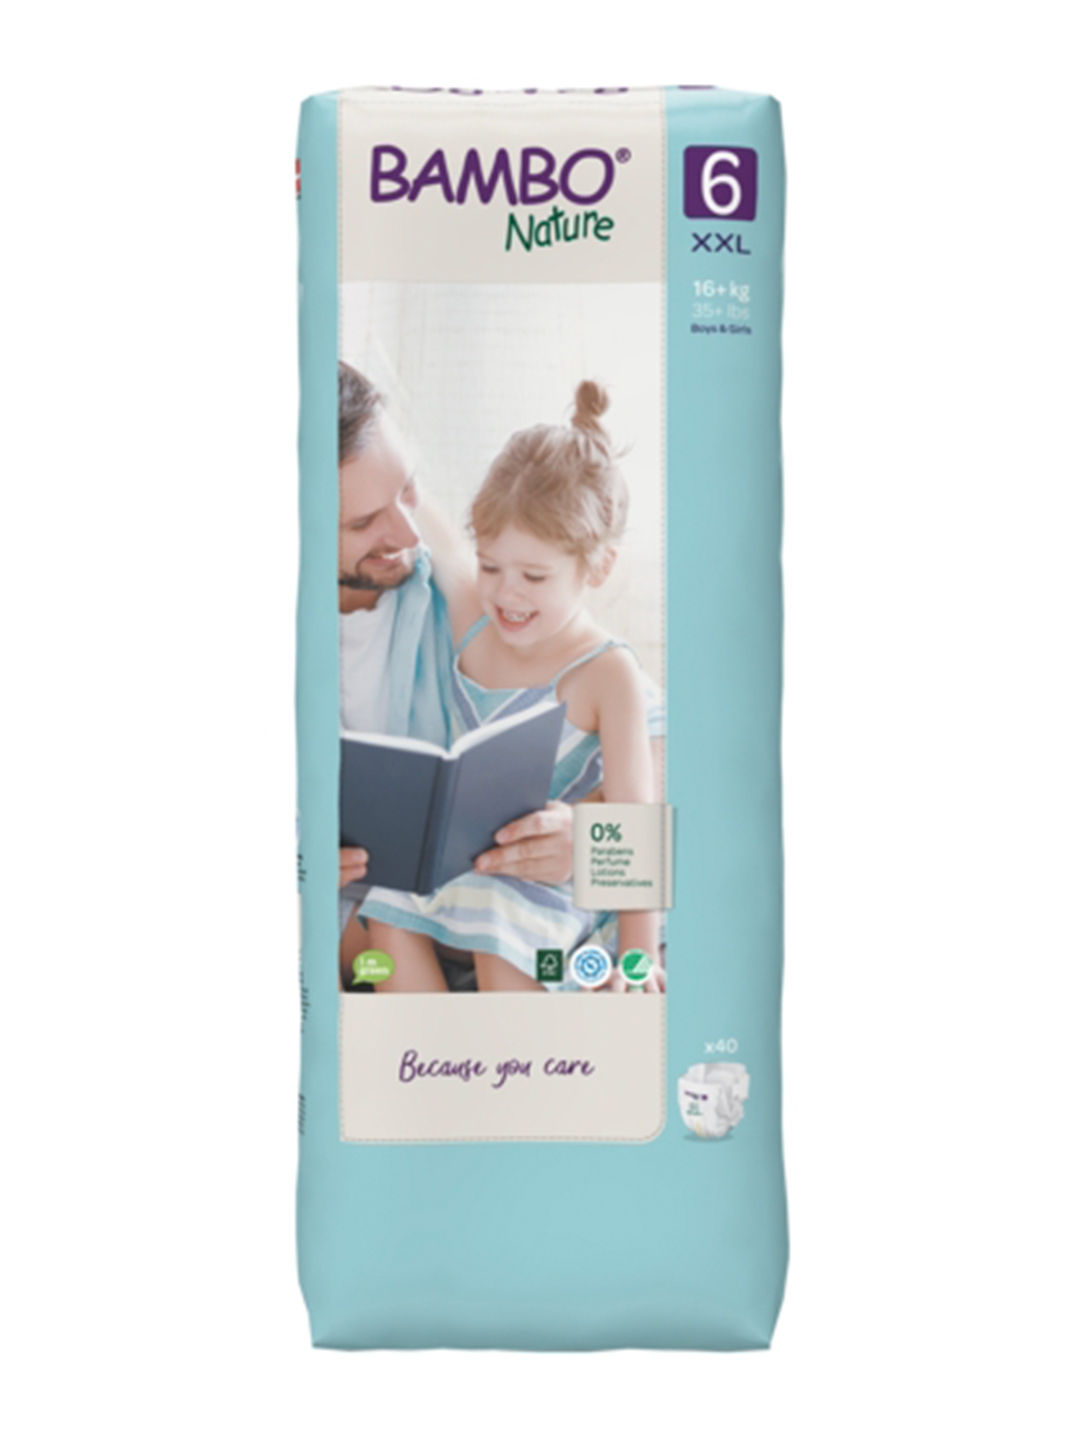 Bambo Nature Premium Baby Diapers - XXL Size, 40 Count, For Preschooler Baby